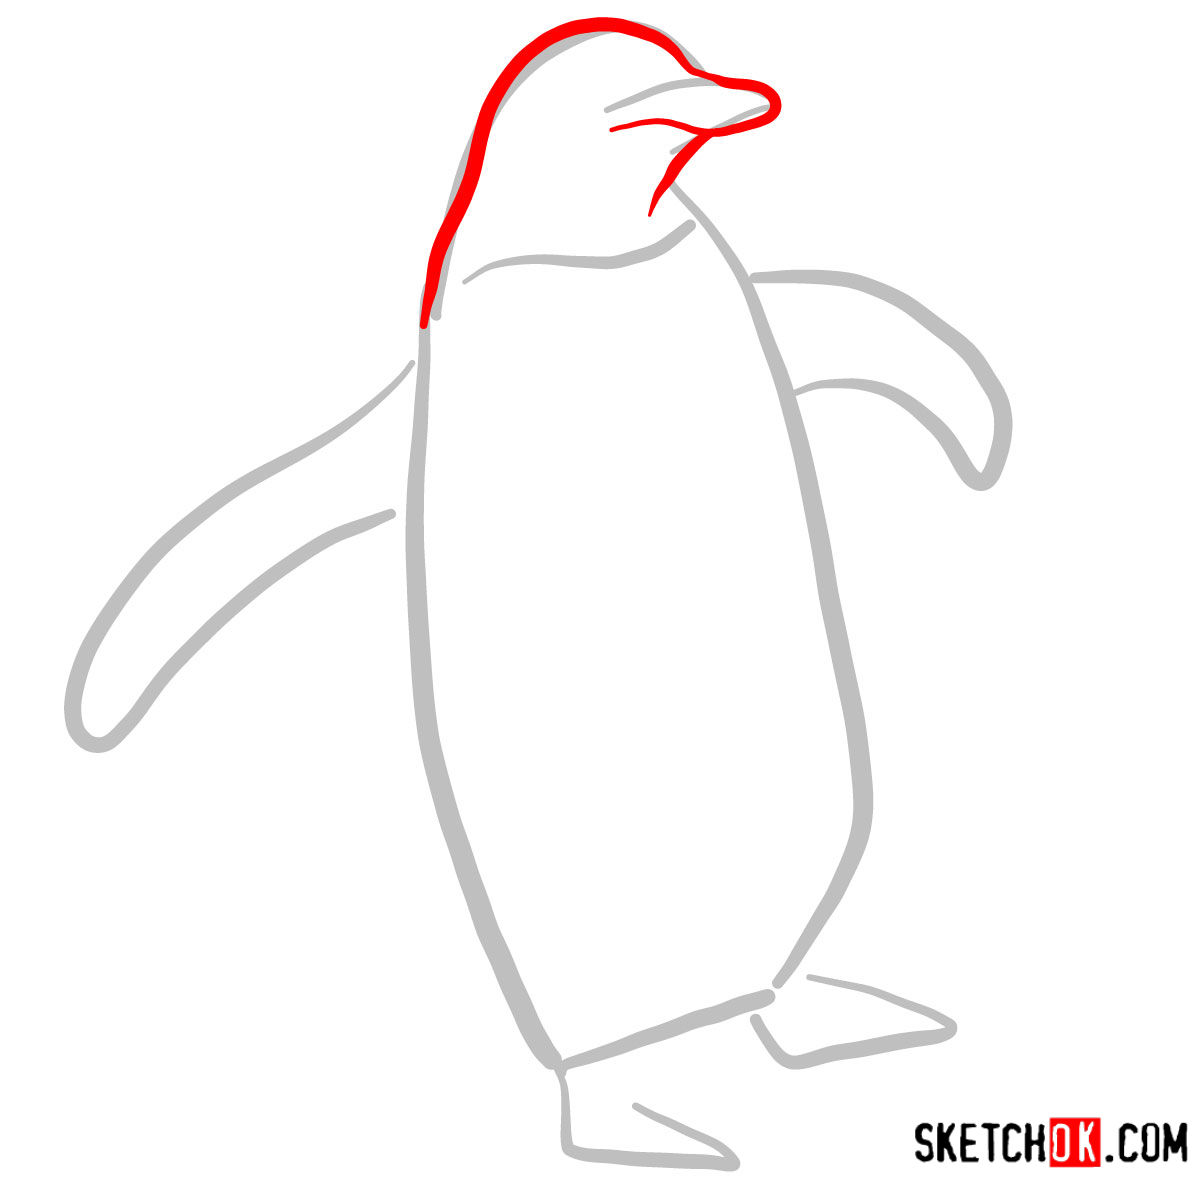 Пингвин рисунок поэтапно карандашом легко